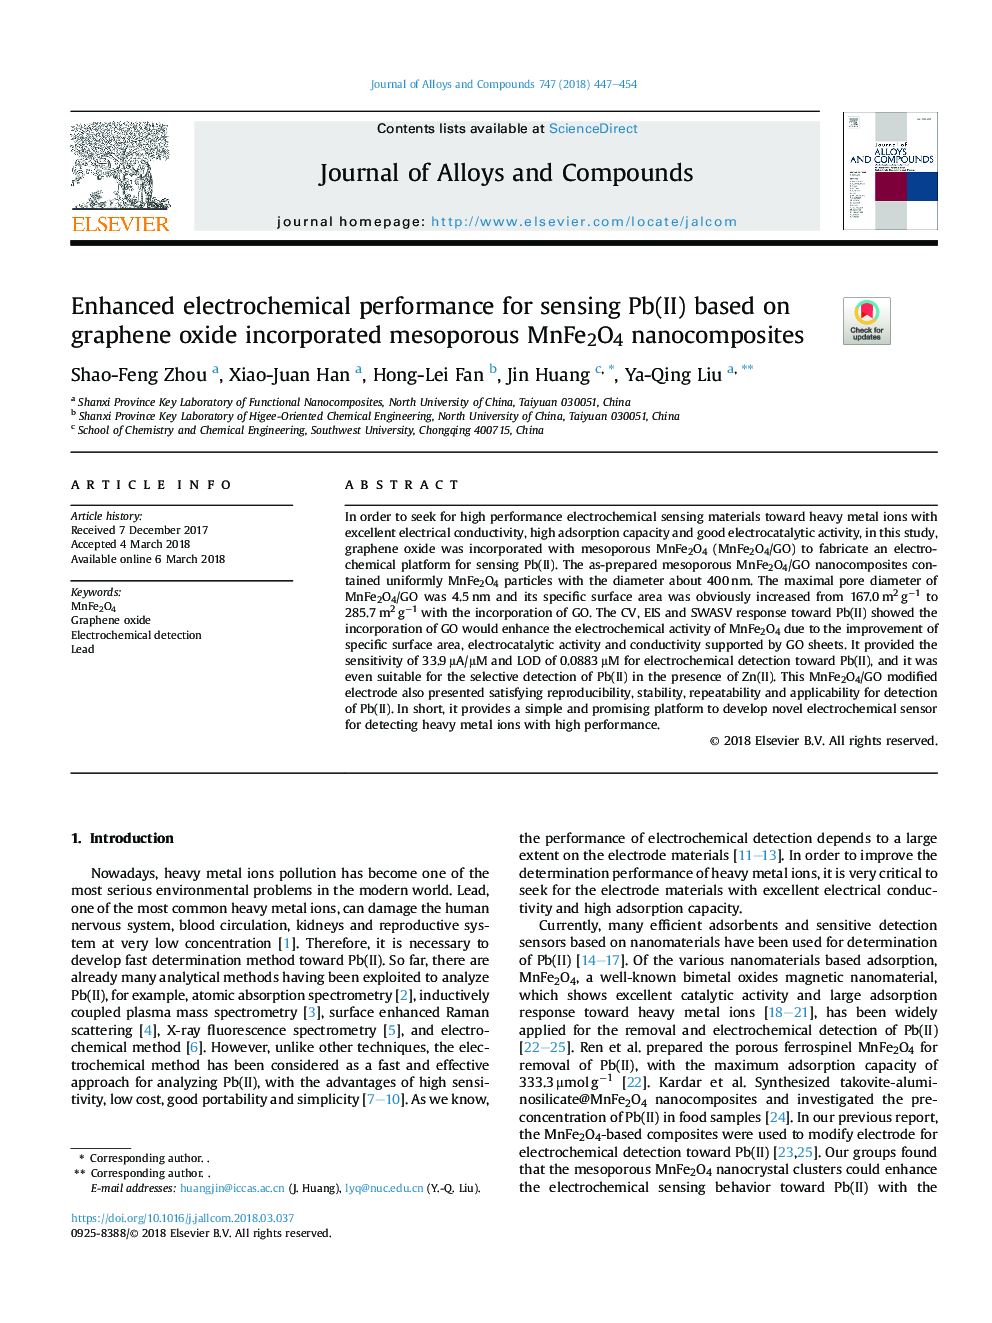 Enhanced electrochemical performance for sensing Pb(II) based on graphene oxide incorporated mesoporous MnFe2O4 nanocomposites